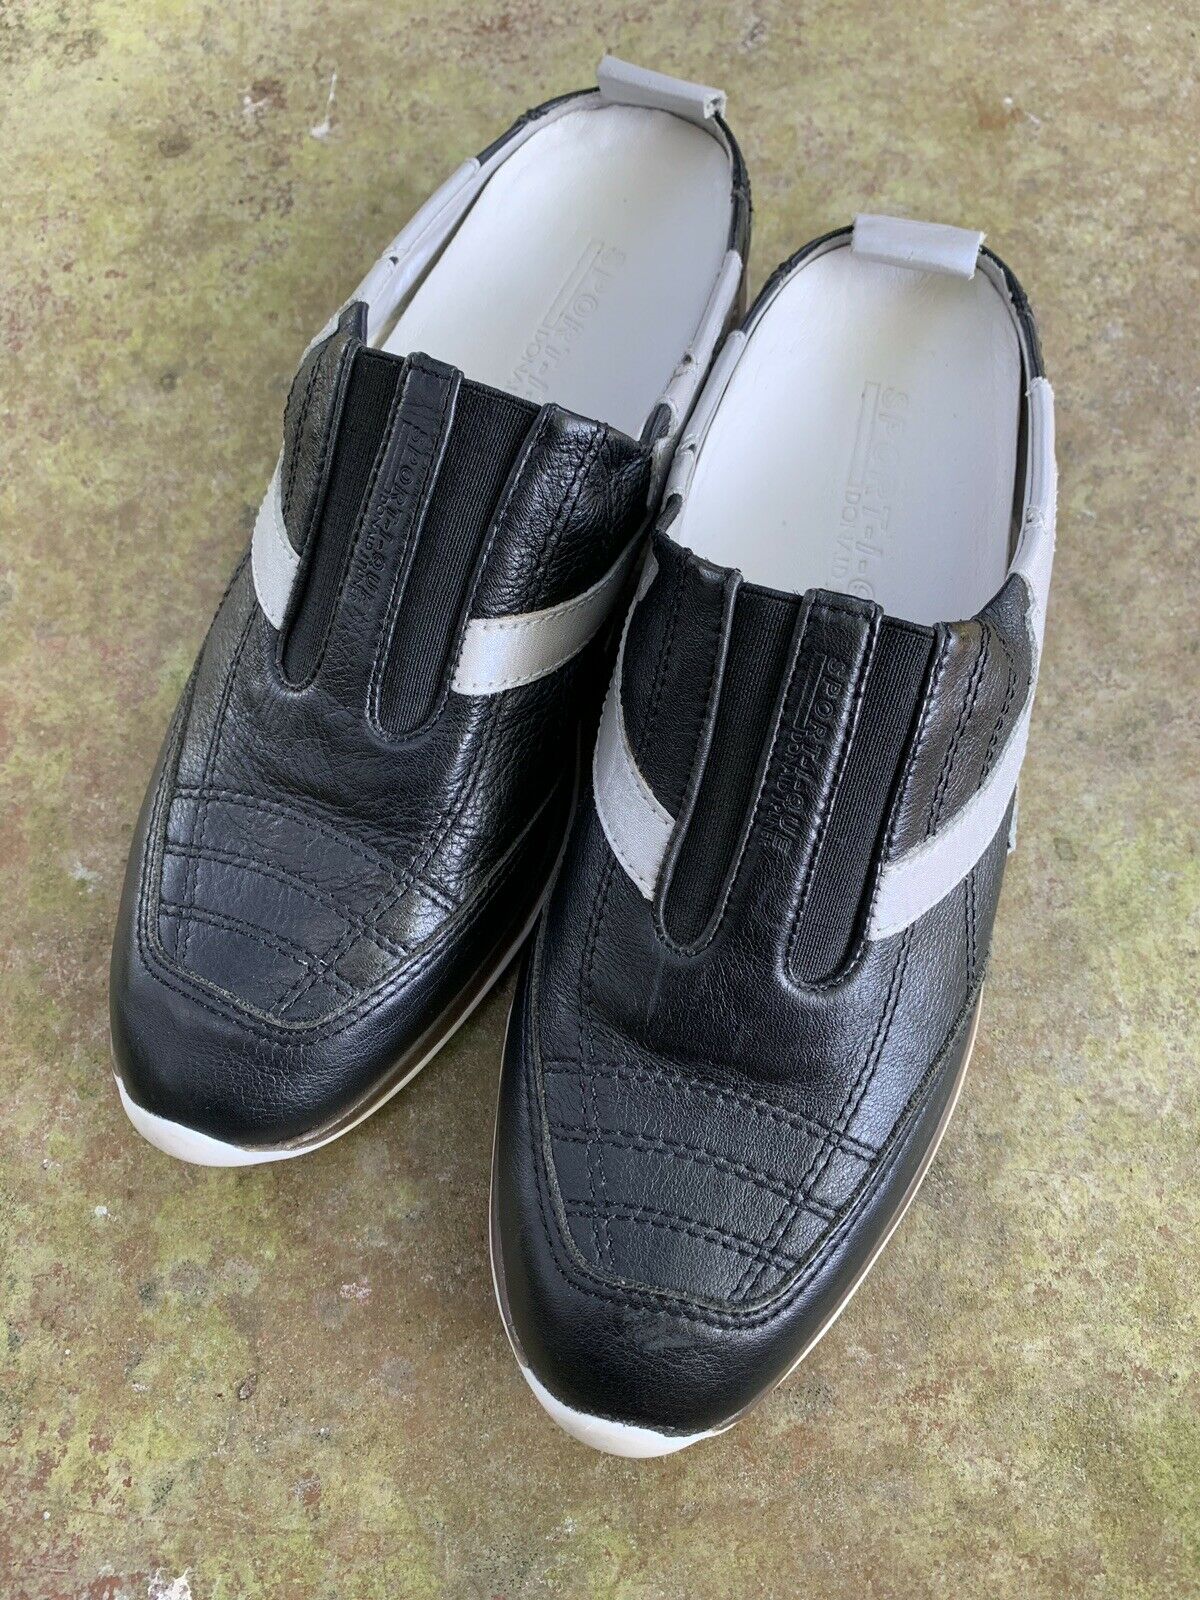 Donald Pliner Sport-I-Que Black And Gray Mule Walking Shoe/sneaker Sz 7